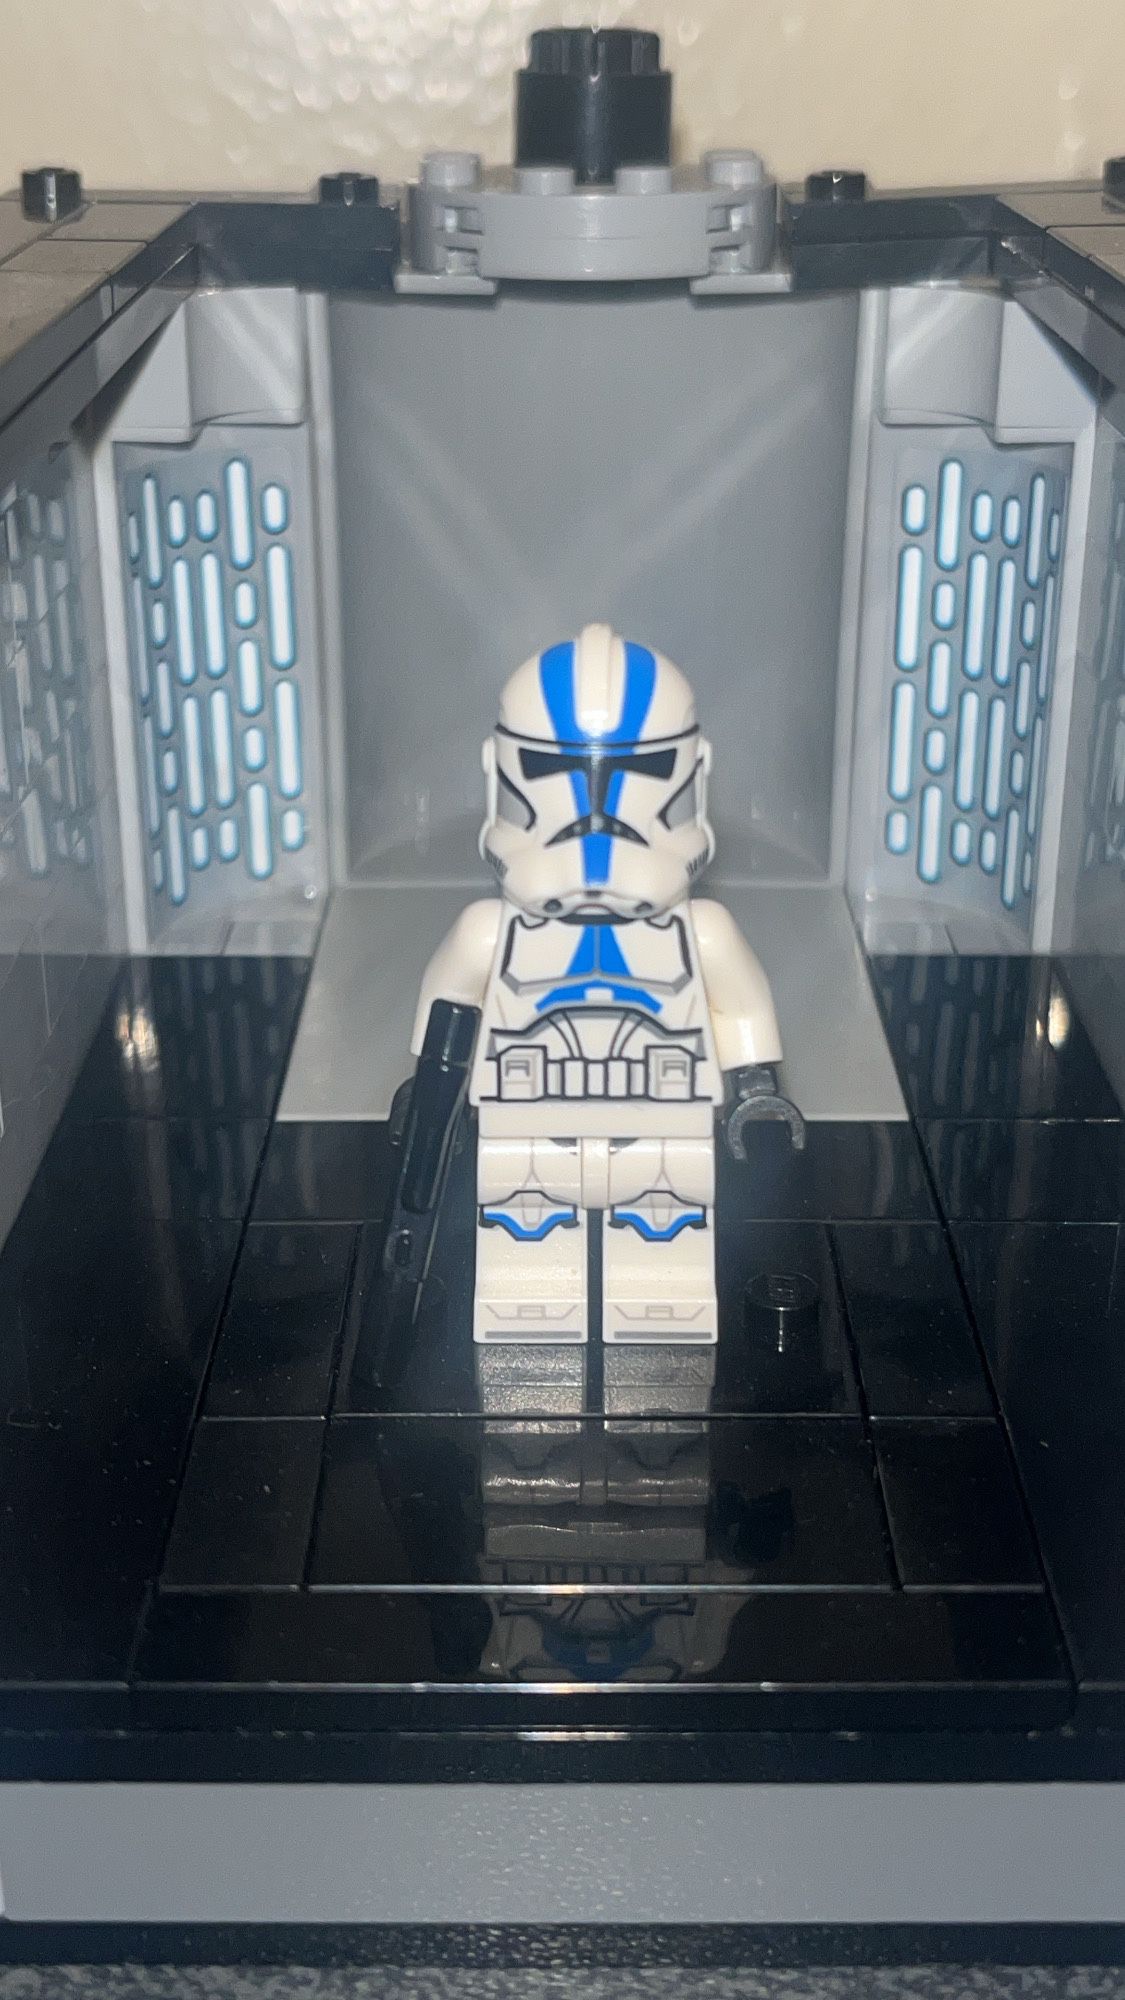 Lego Star Wars 501st Legion Clone Trooper From Set 75280